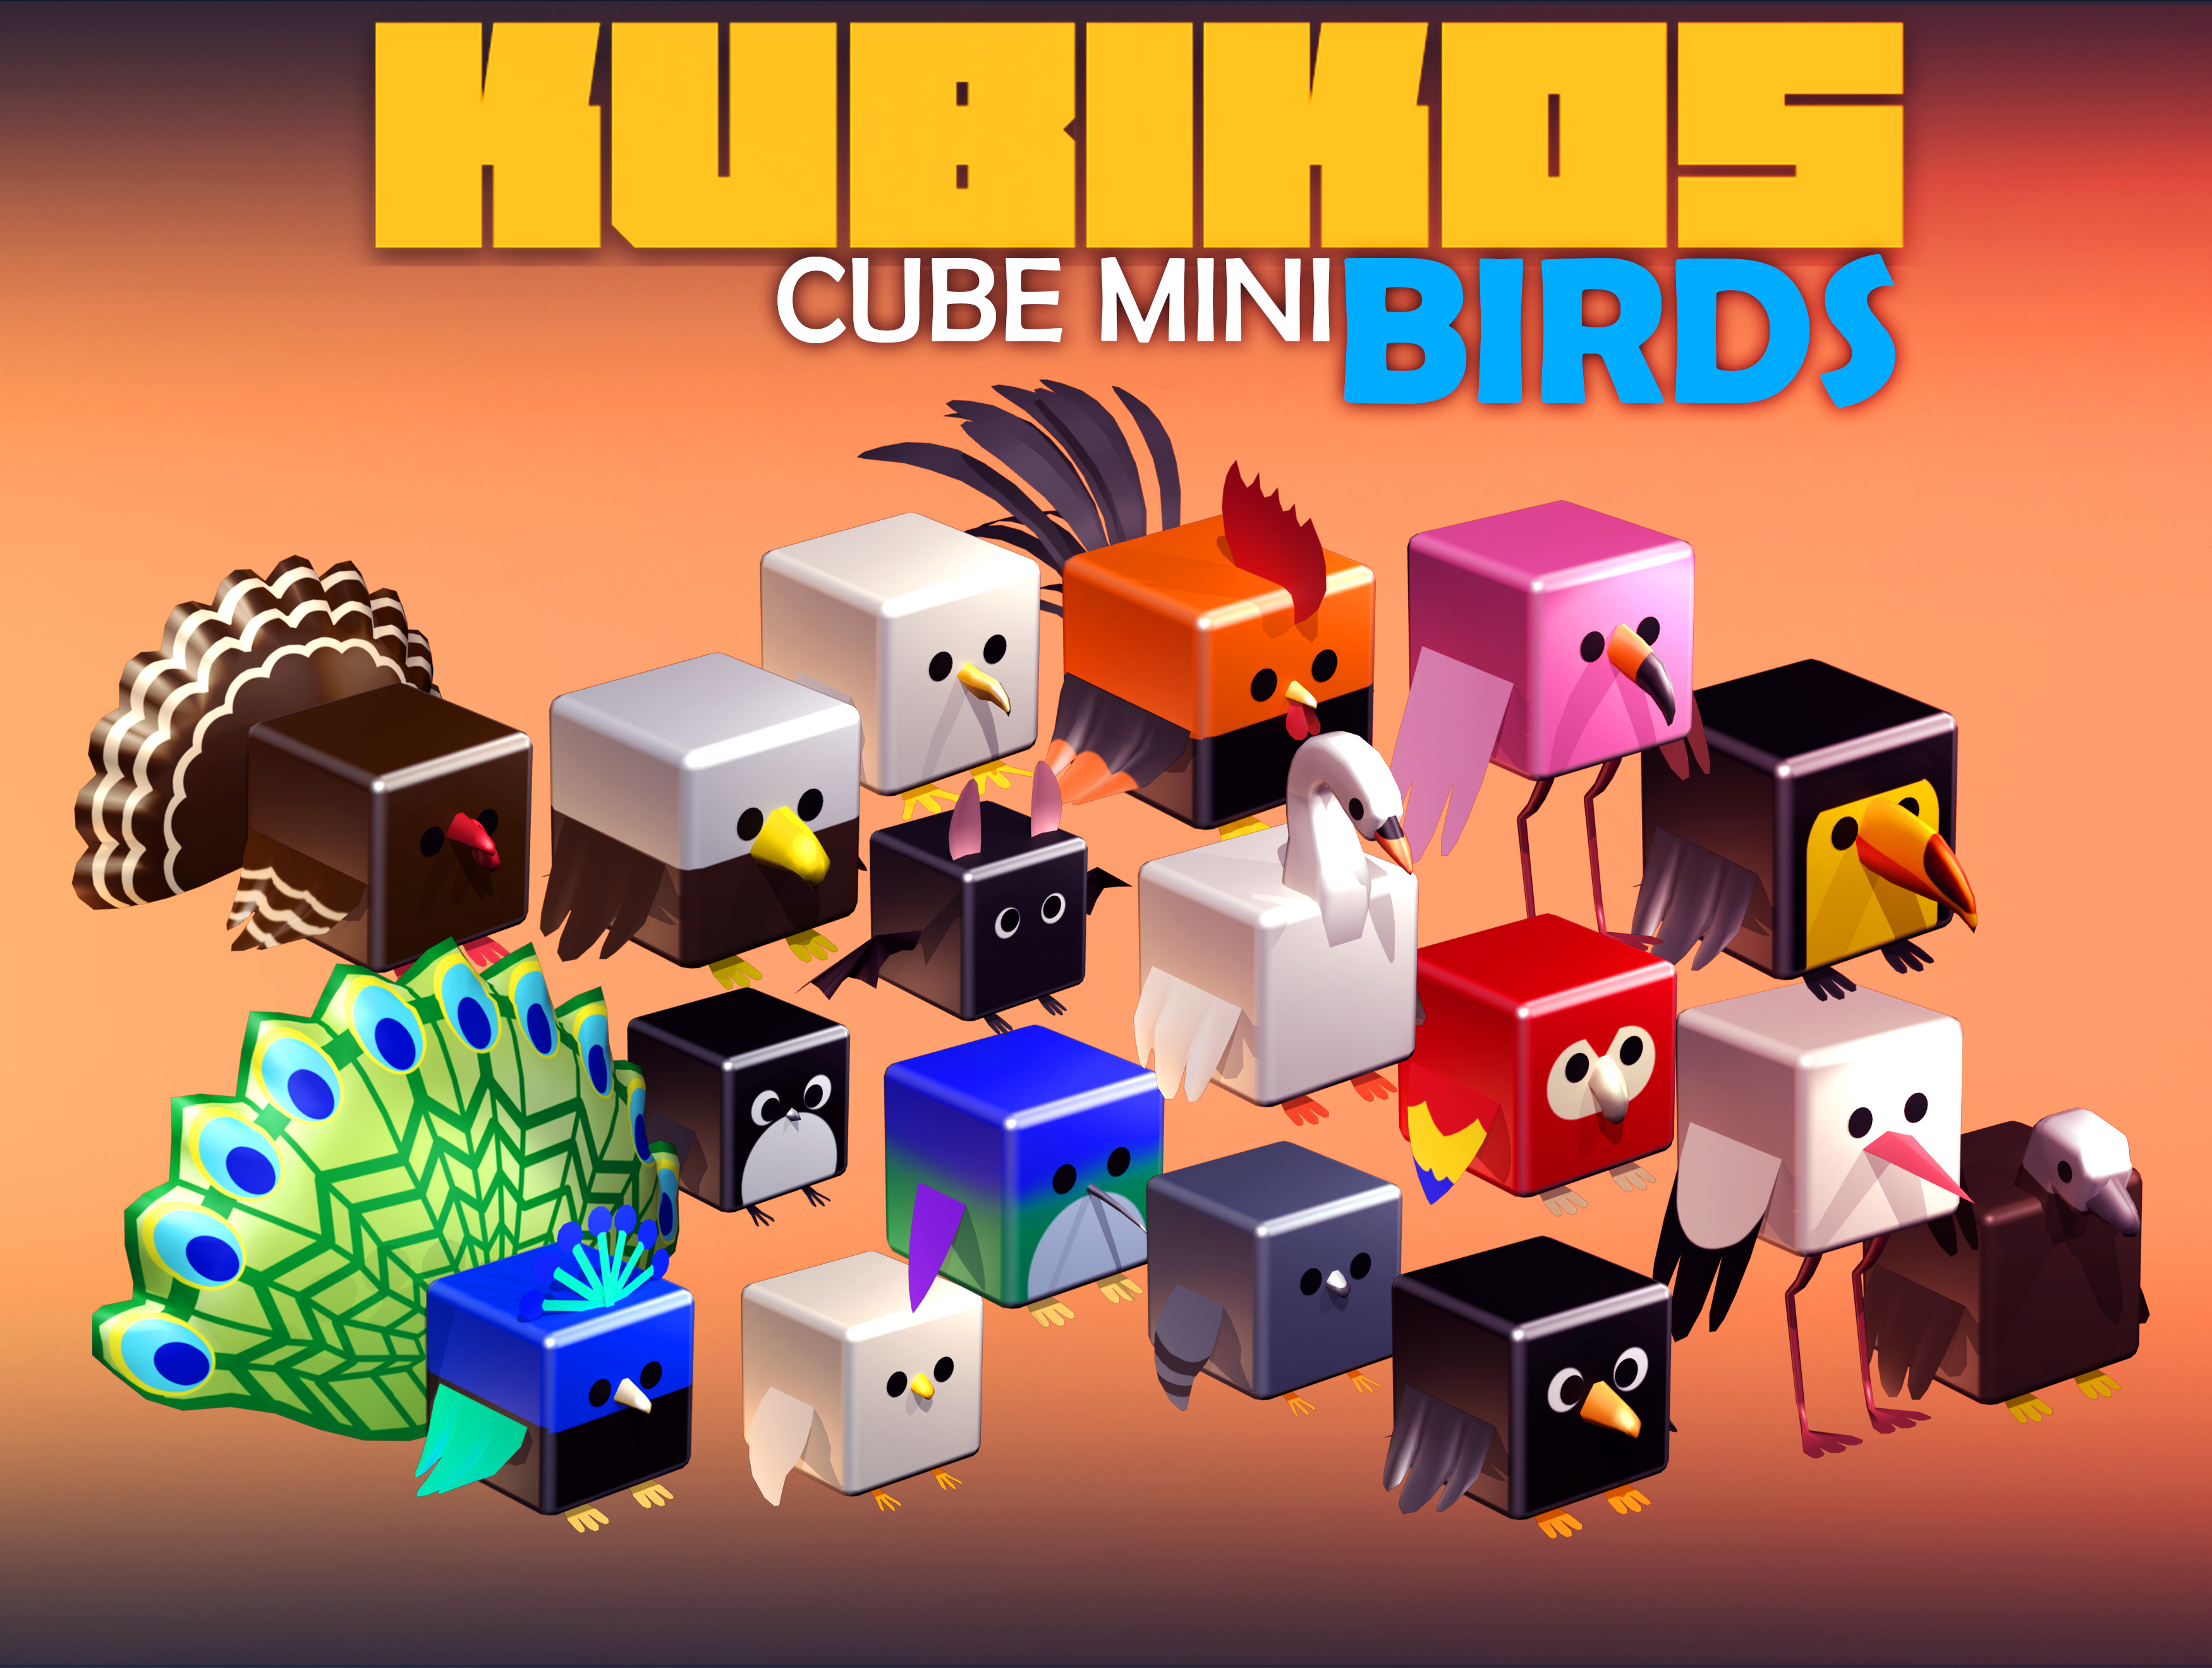 Birds unity. Cube character. Cube Mini. Kubikos_3d_Cube_World_1.2. Minicube картинка.